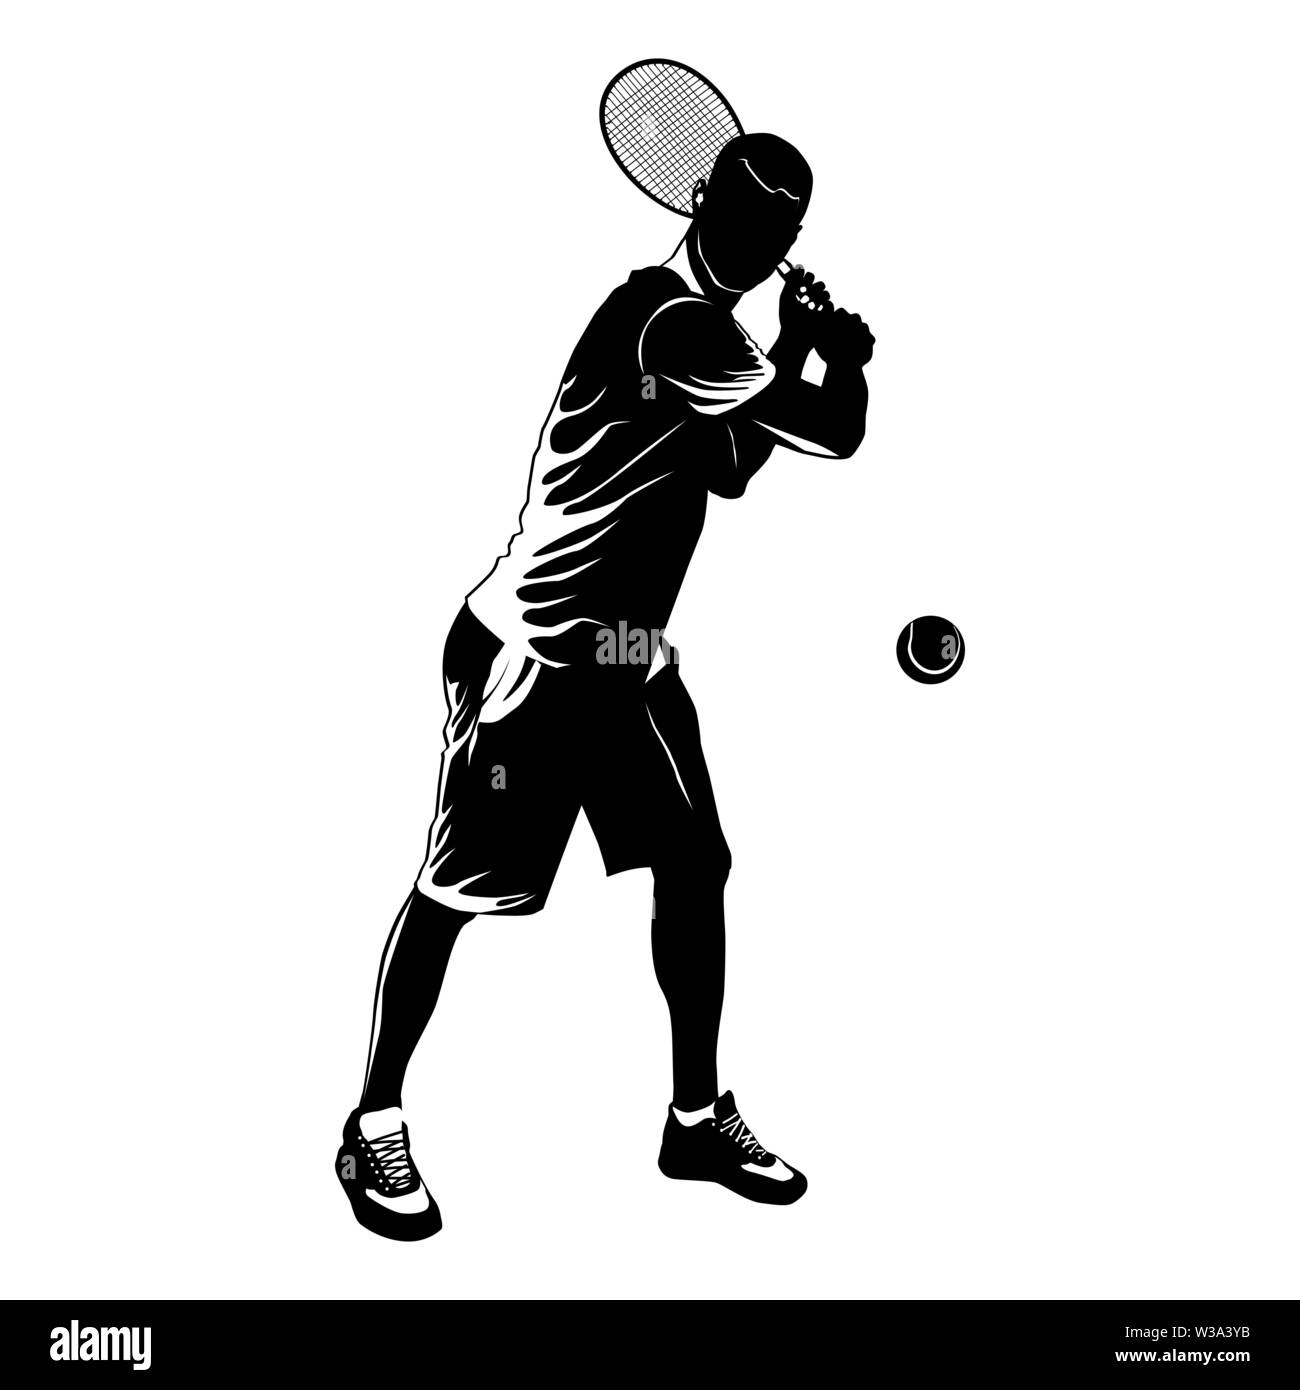 Tennis player black silhouette on white background, vector illustration Stock Vector